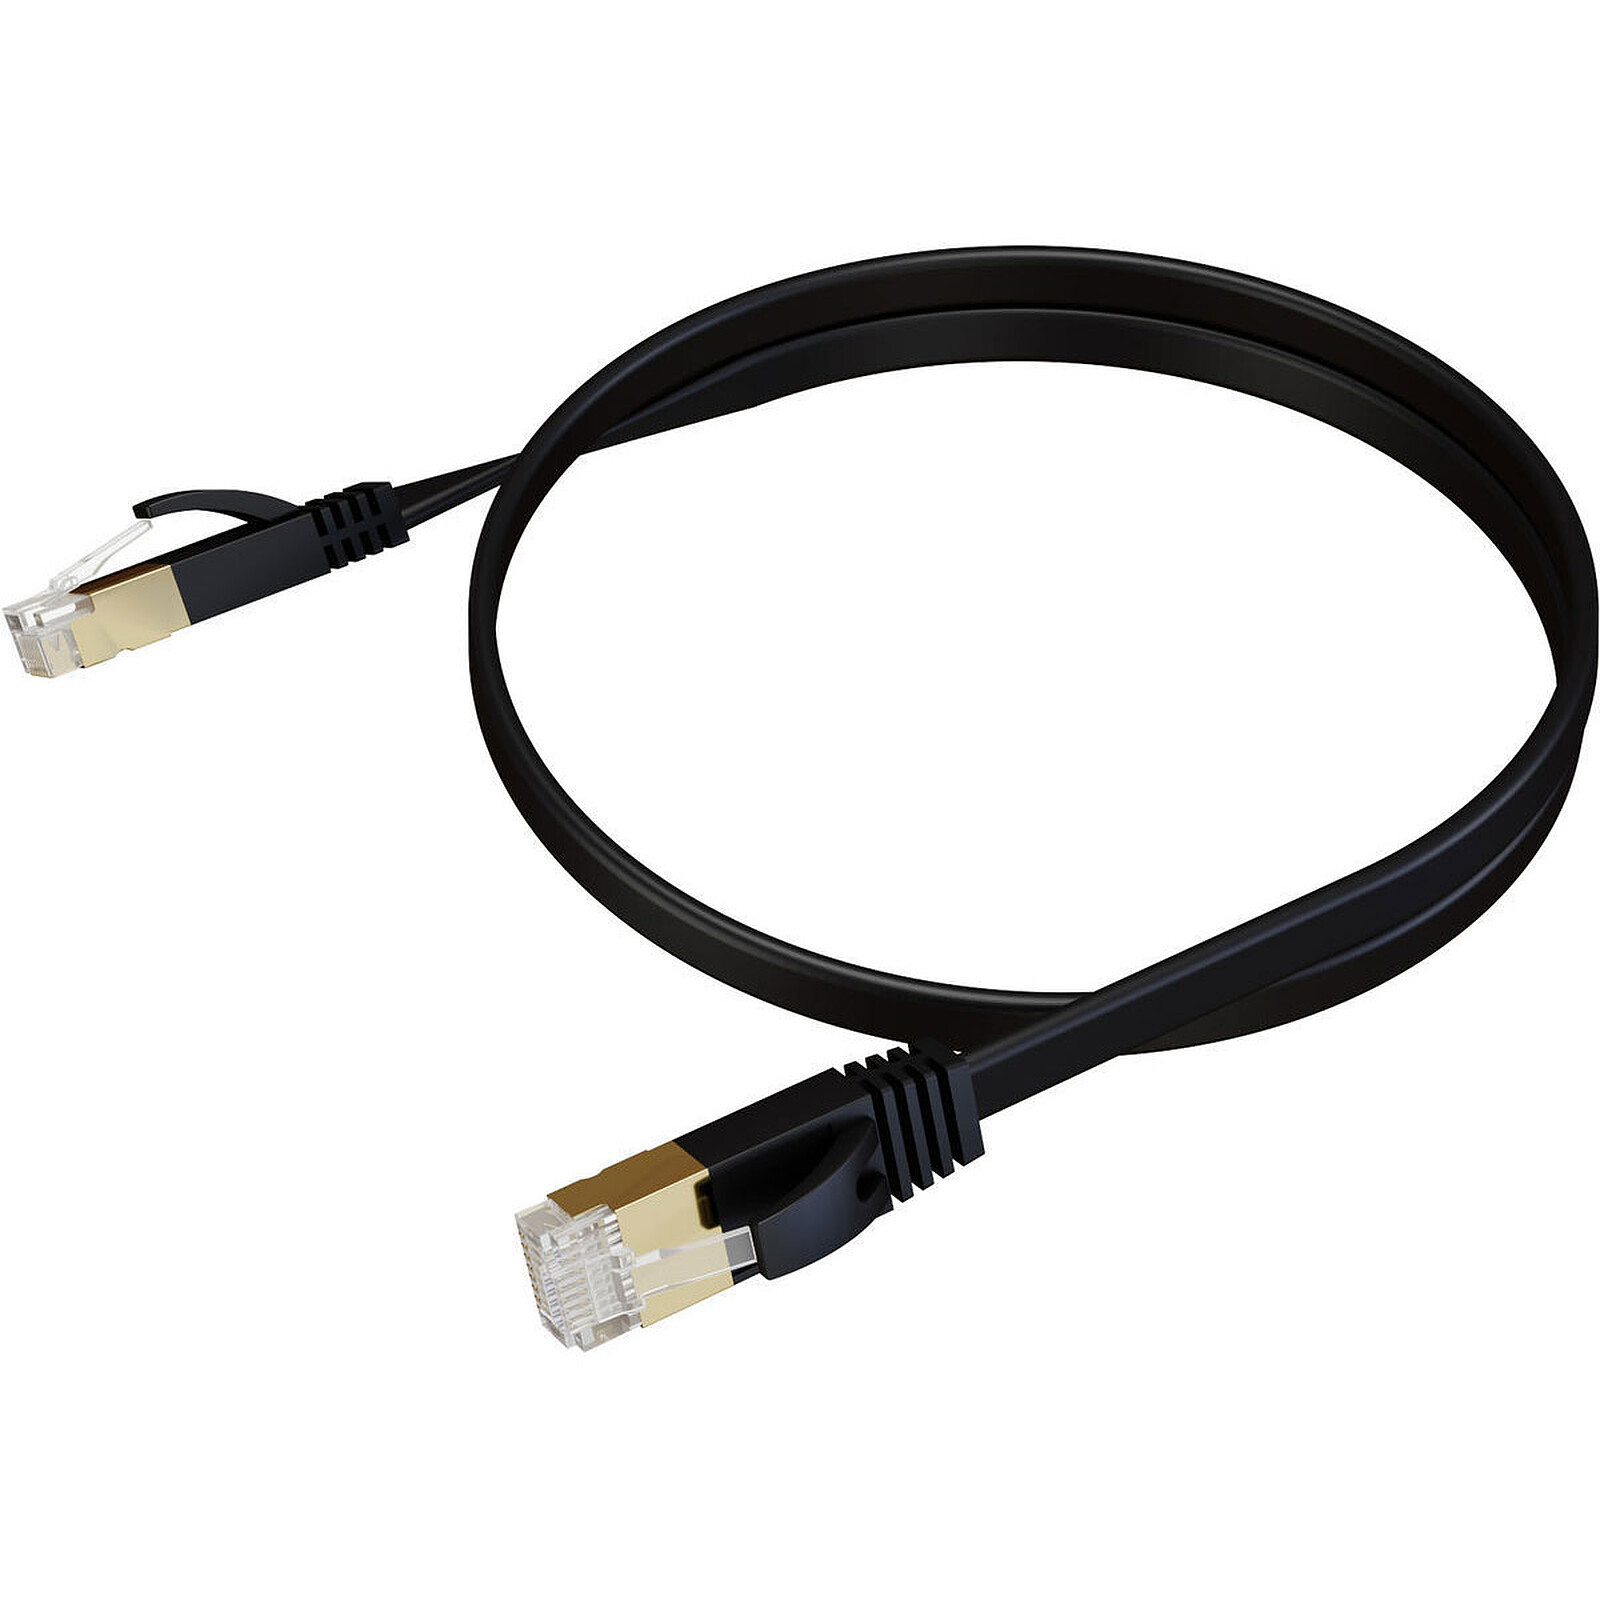 solo Prestador Besugo Cable real E-NET 600-2 (15 m) - Cable RJ45 Real Cable en LDLC